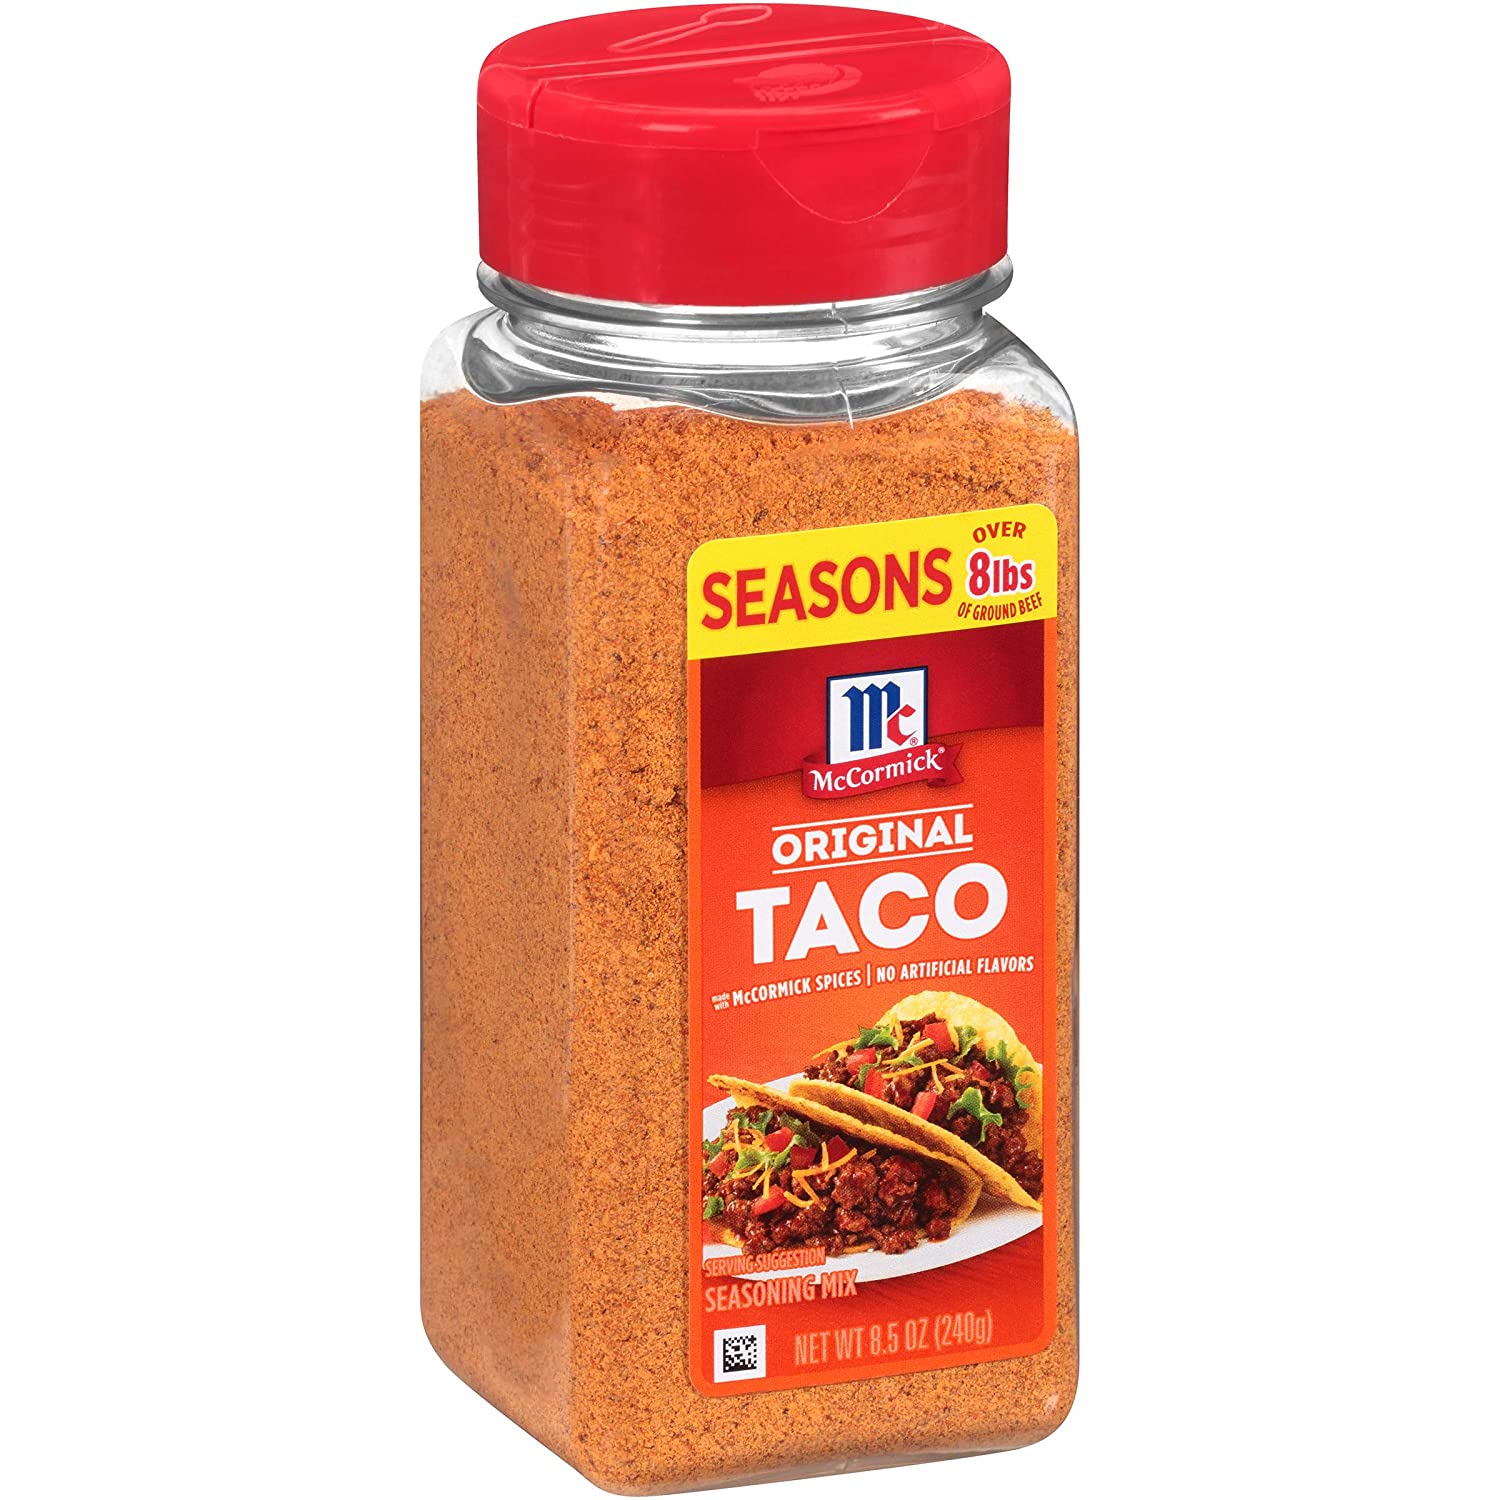 McCormick Original Taco Seasoning Mix, 8.5 oz, as low as $3.25 on Amazon